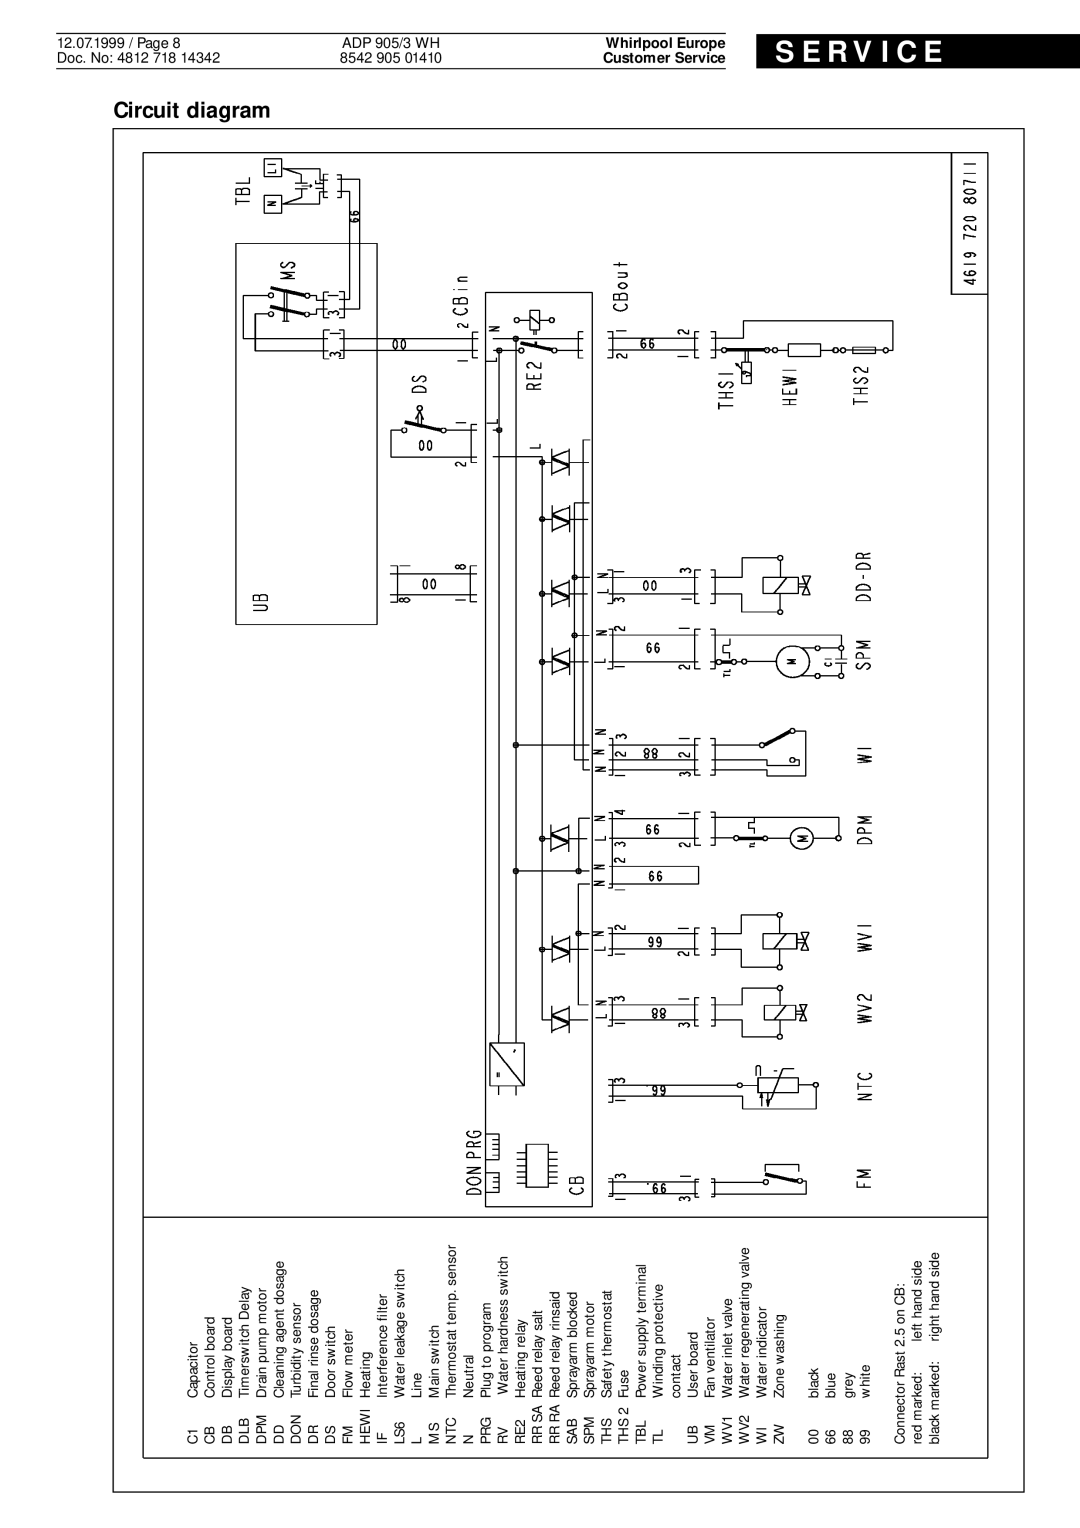 Whirlpool ADP 905/3 WH service manual Circuit diagram, Whirlpool Europe Customer Service S E R V I C E 